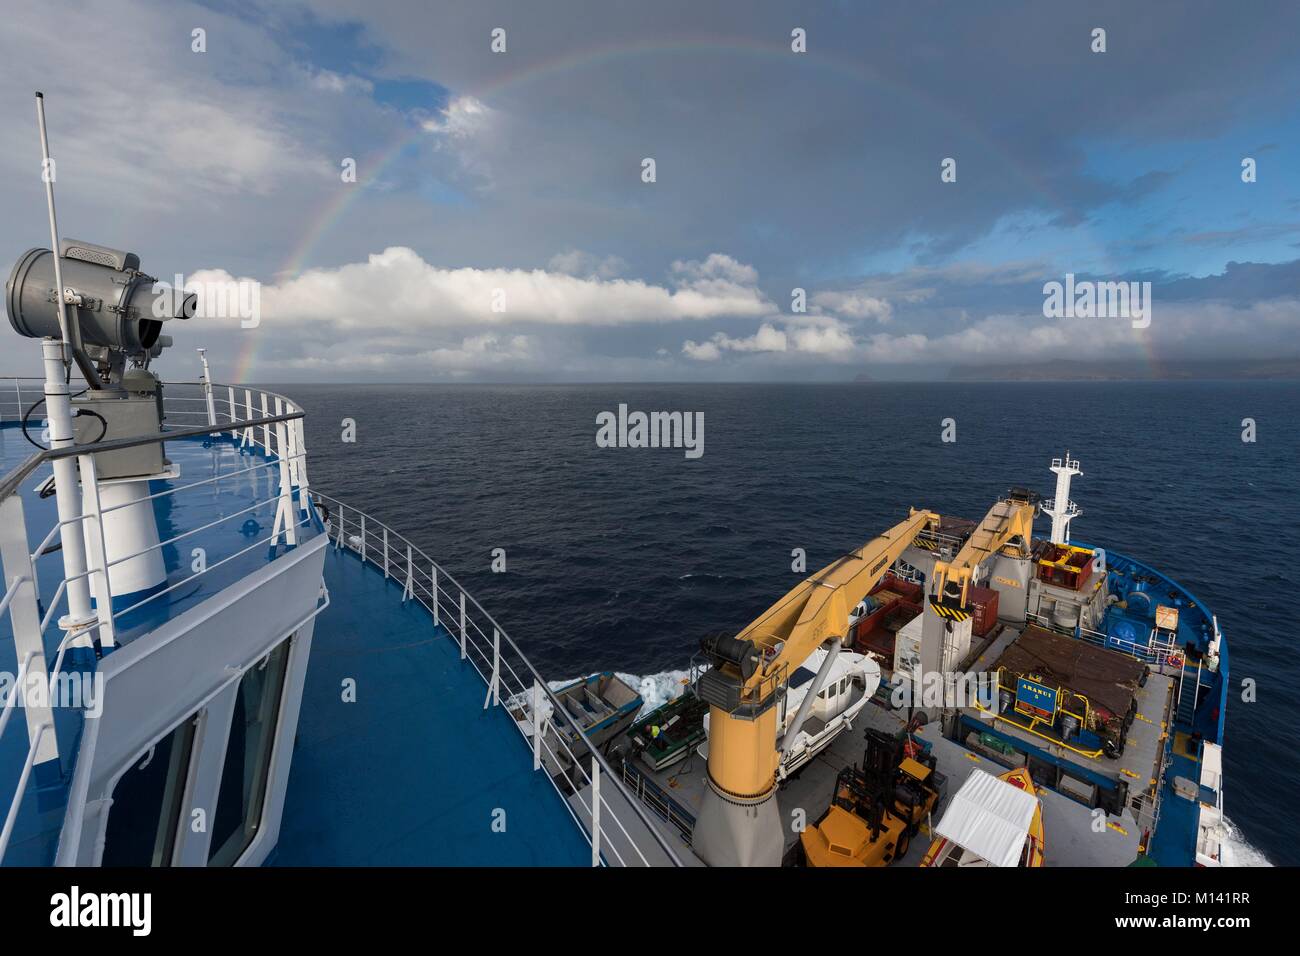 Francia Polinesia francese Isole Marchesi arcipelago, Crociera a bordo il Aranui 5, rainbow sull'Oceano Pacifico, arrivo all'isola di Ua Huka Foto Stock